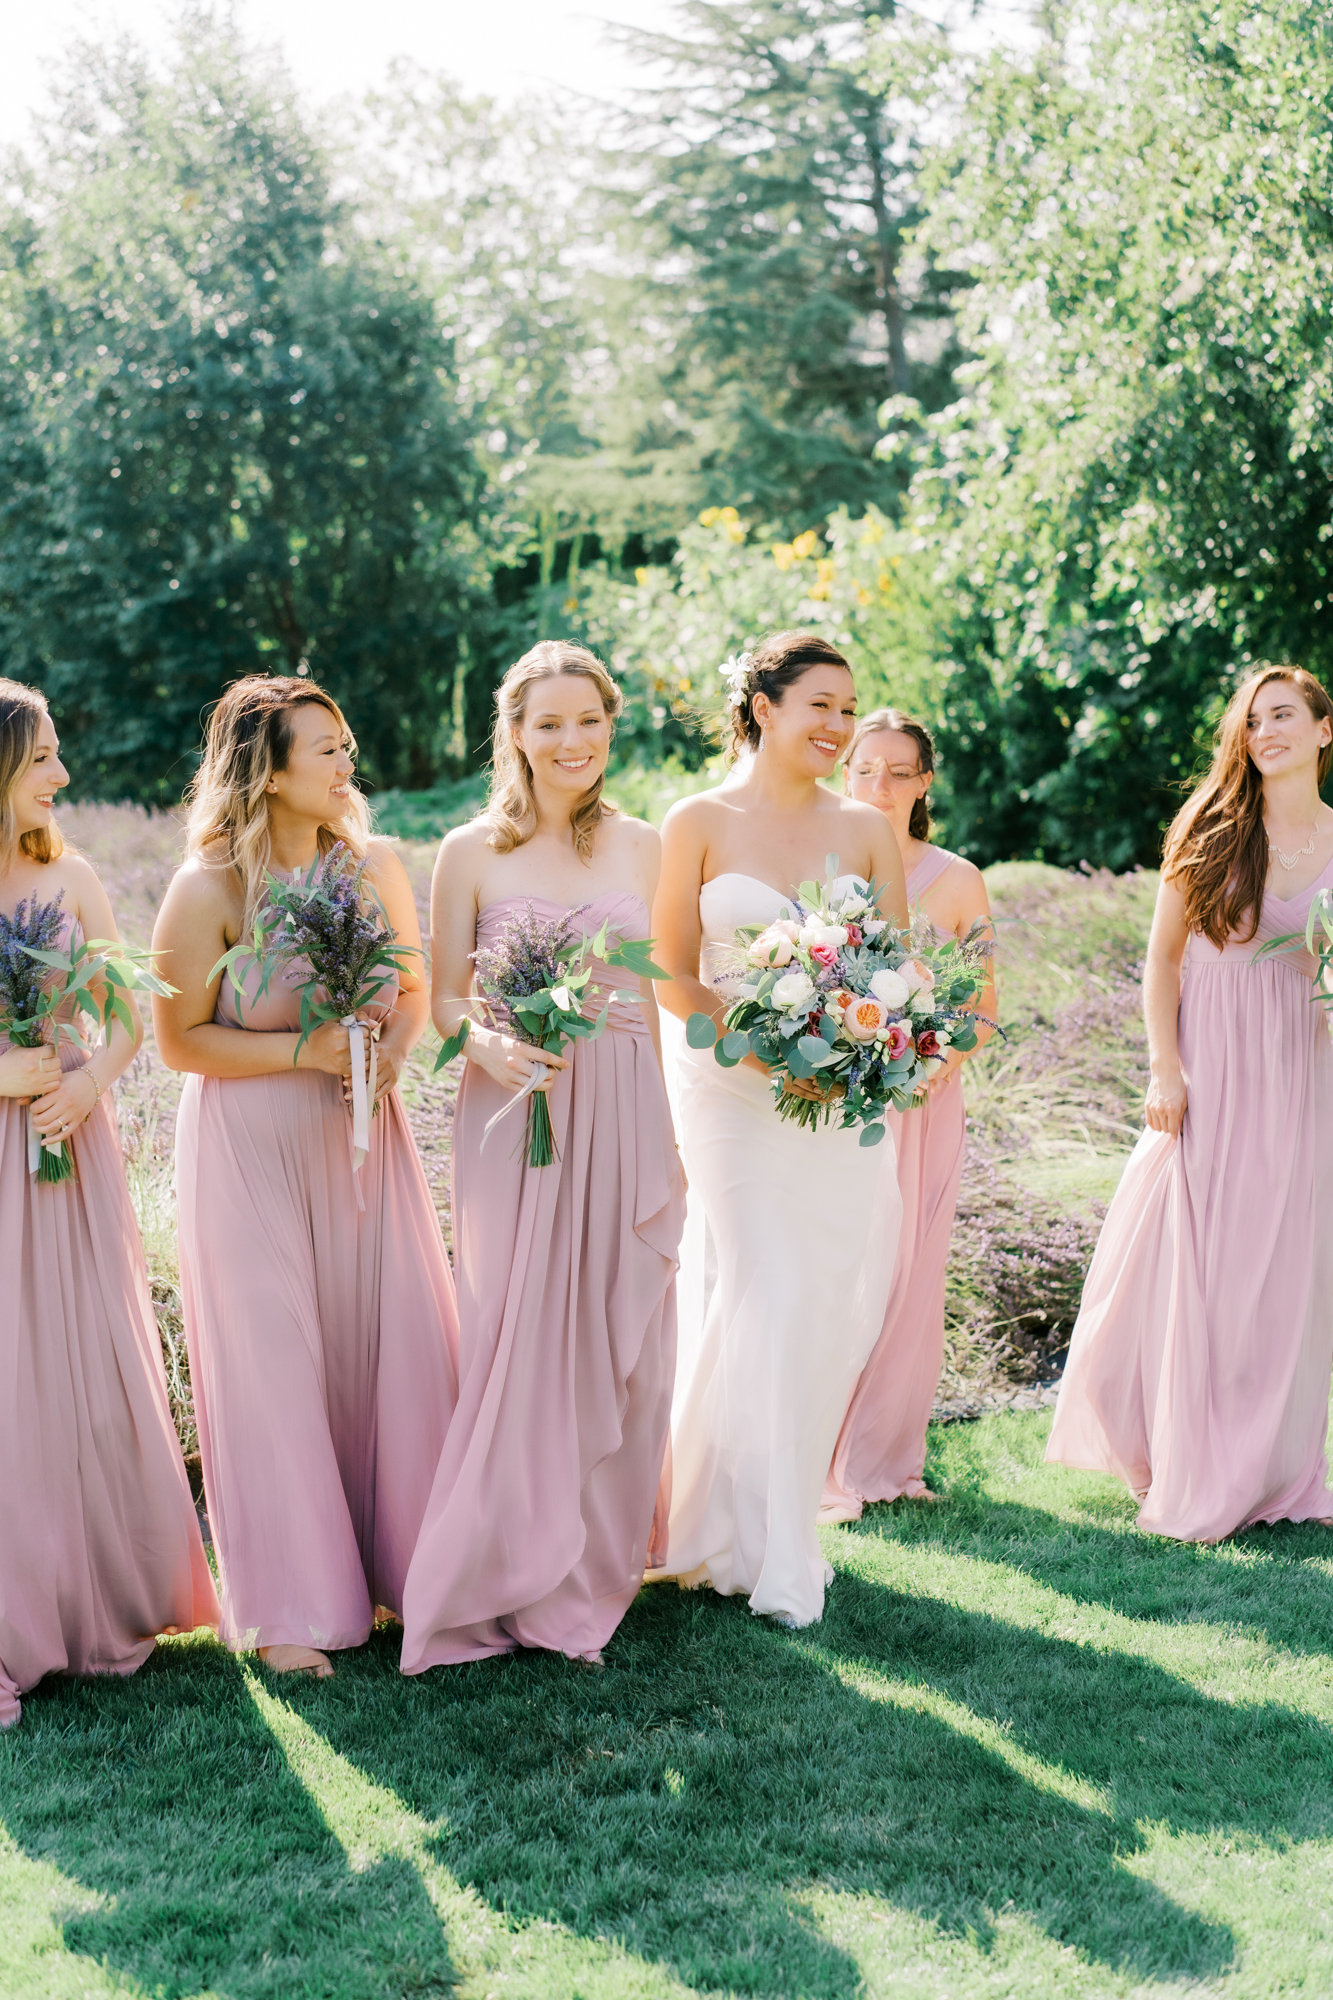 Woodinville Lavender Farm weddings: Bridesmaids